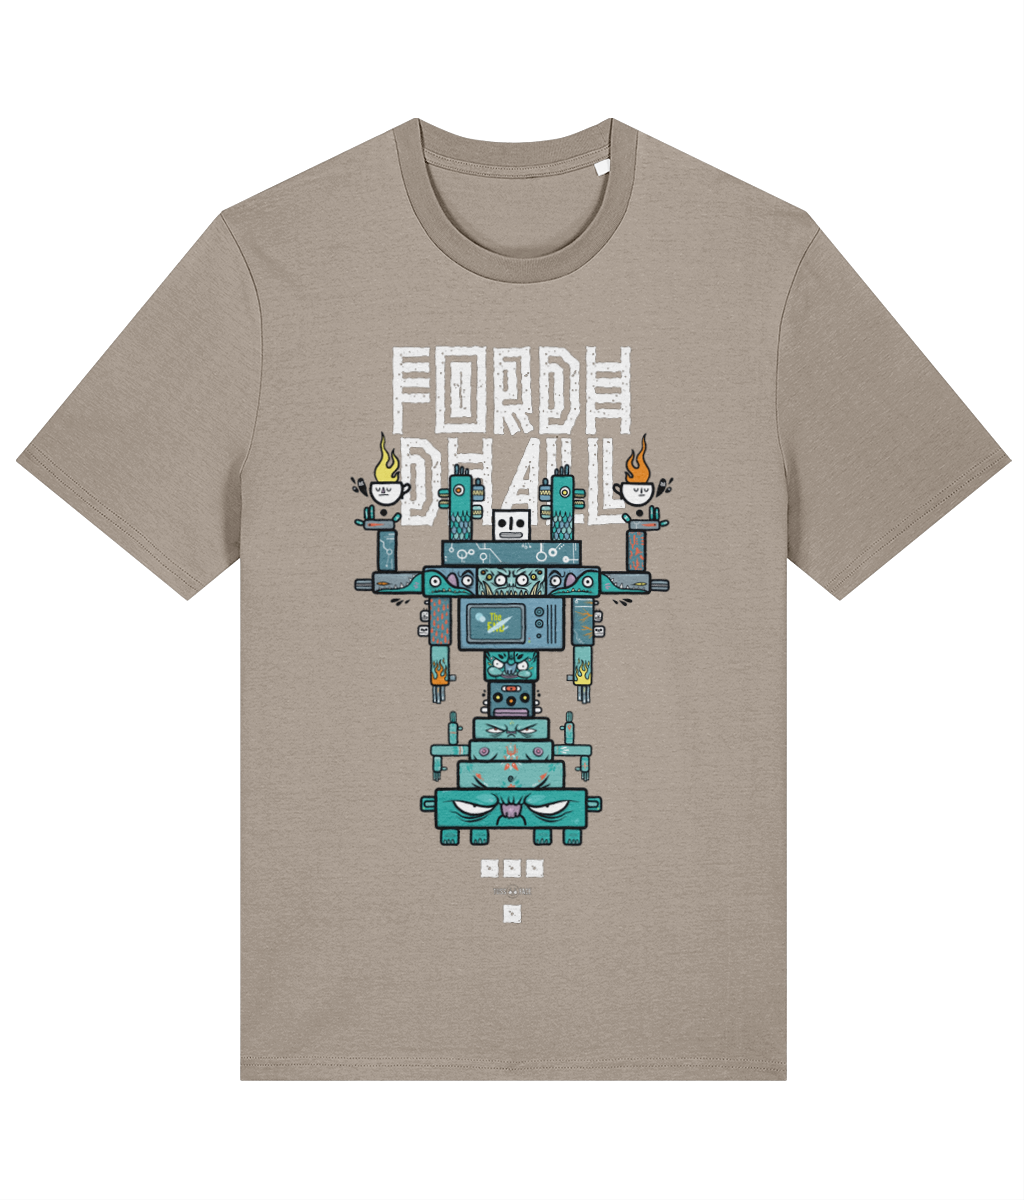 Dead End / Fordh Dhall - Kernewek Tussface T-shirt